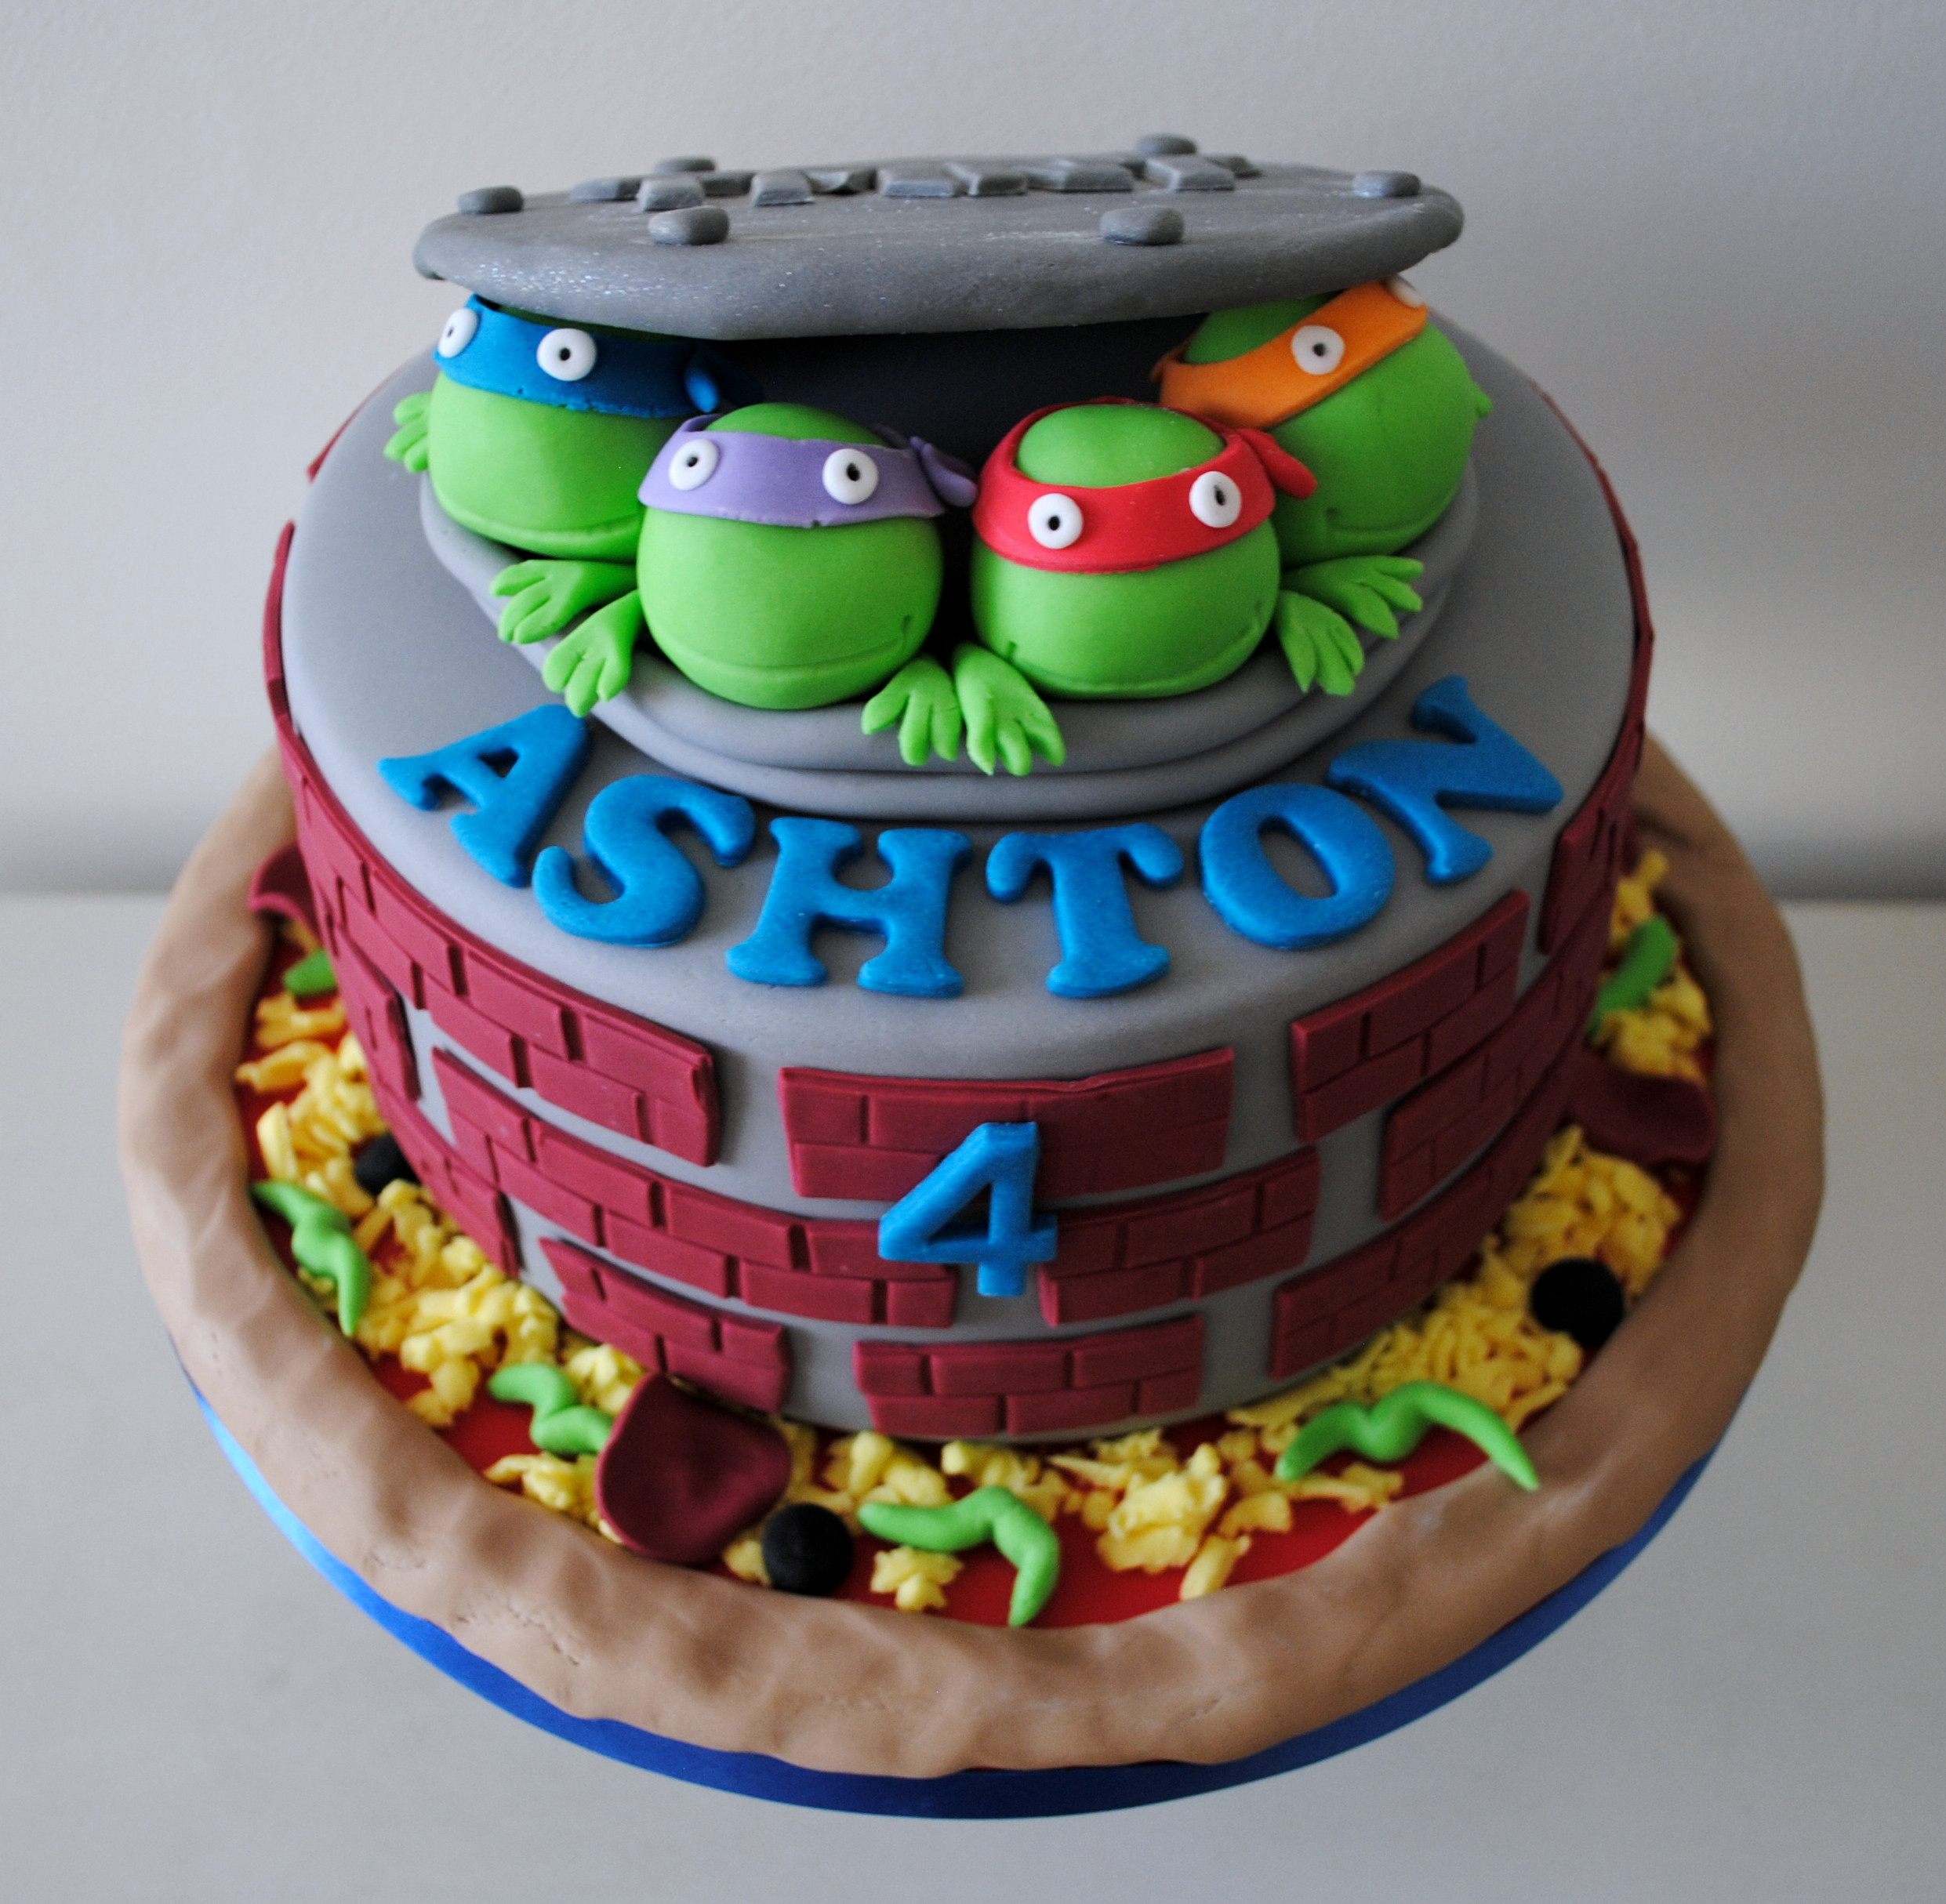 Best ideas about Teenage Mutant Ninja Turtle Birthday Cake
. Save or Pin Miss Cupcakes Blog Archive Teenage mutant ninja turtle Now.